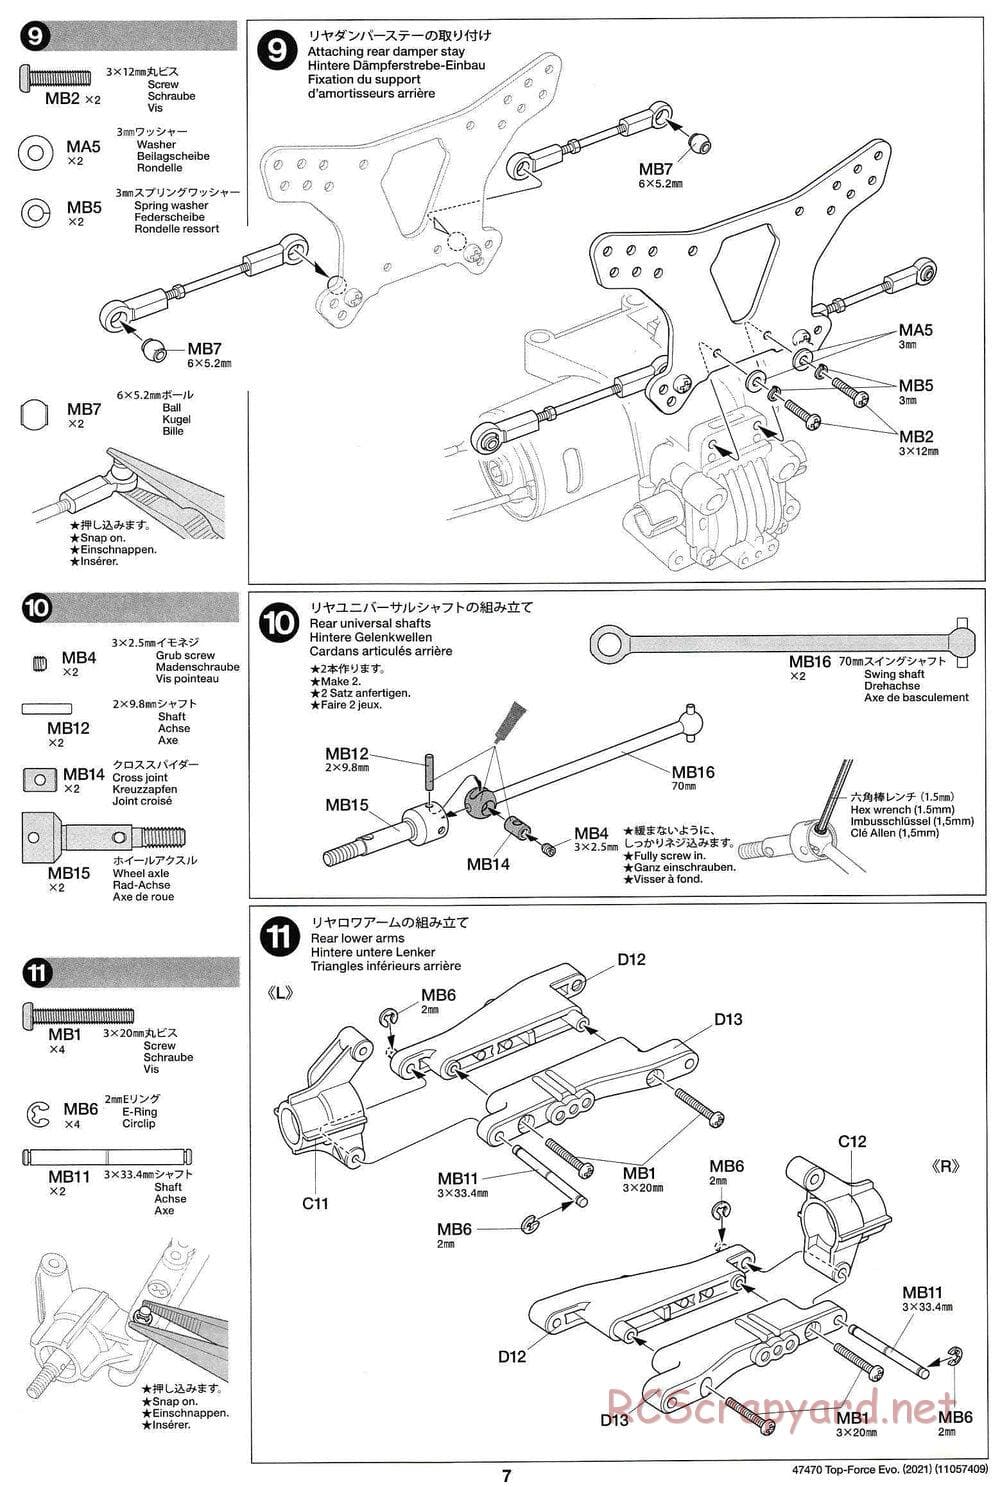 Tamiya - Top Force Evo 2021 - DF-01 Chassis - Manual - Page 7